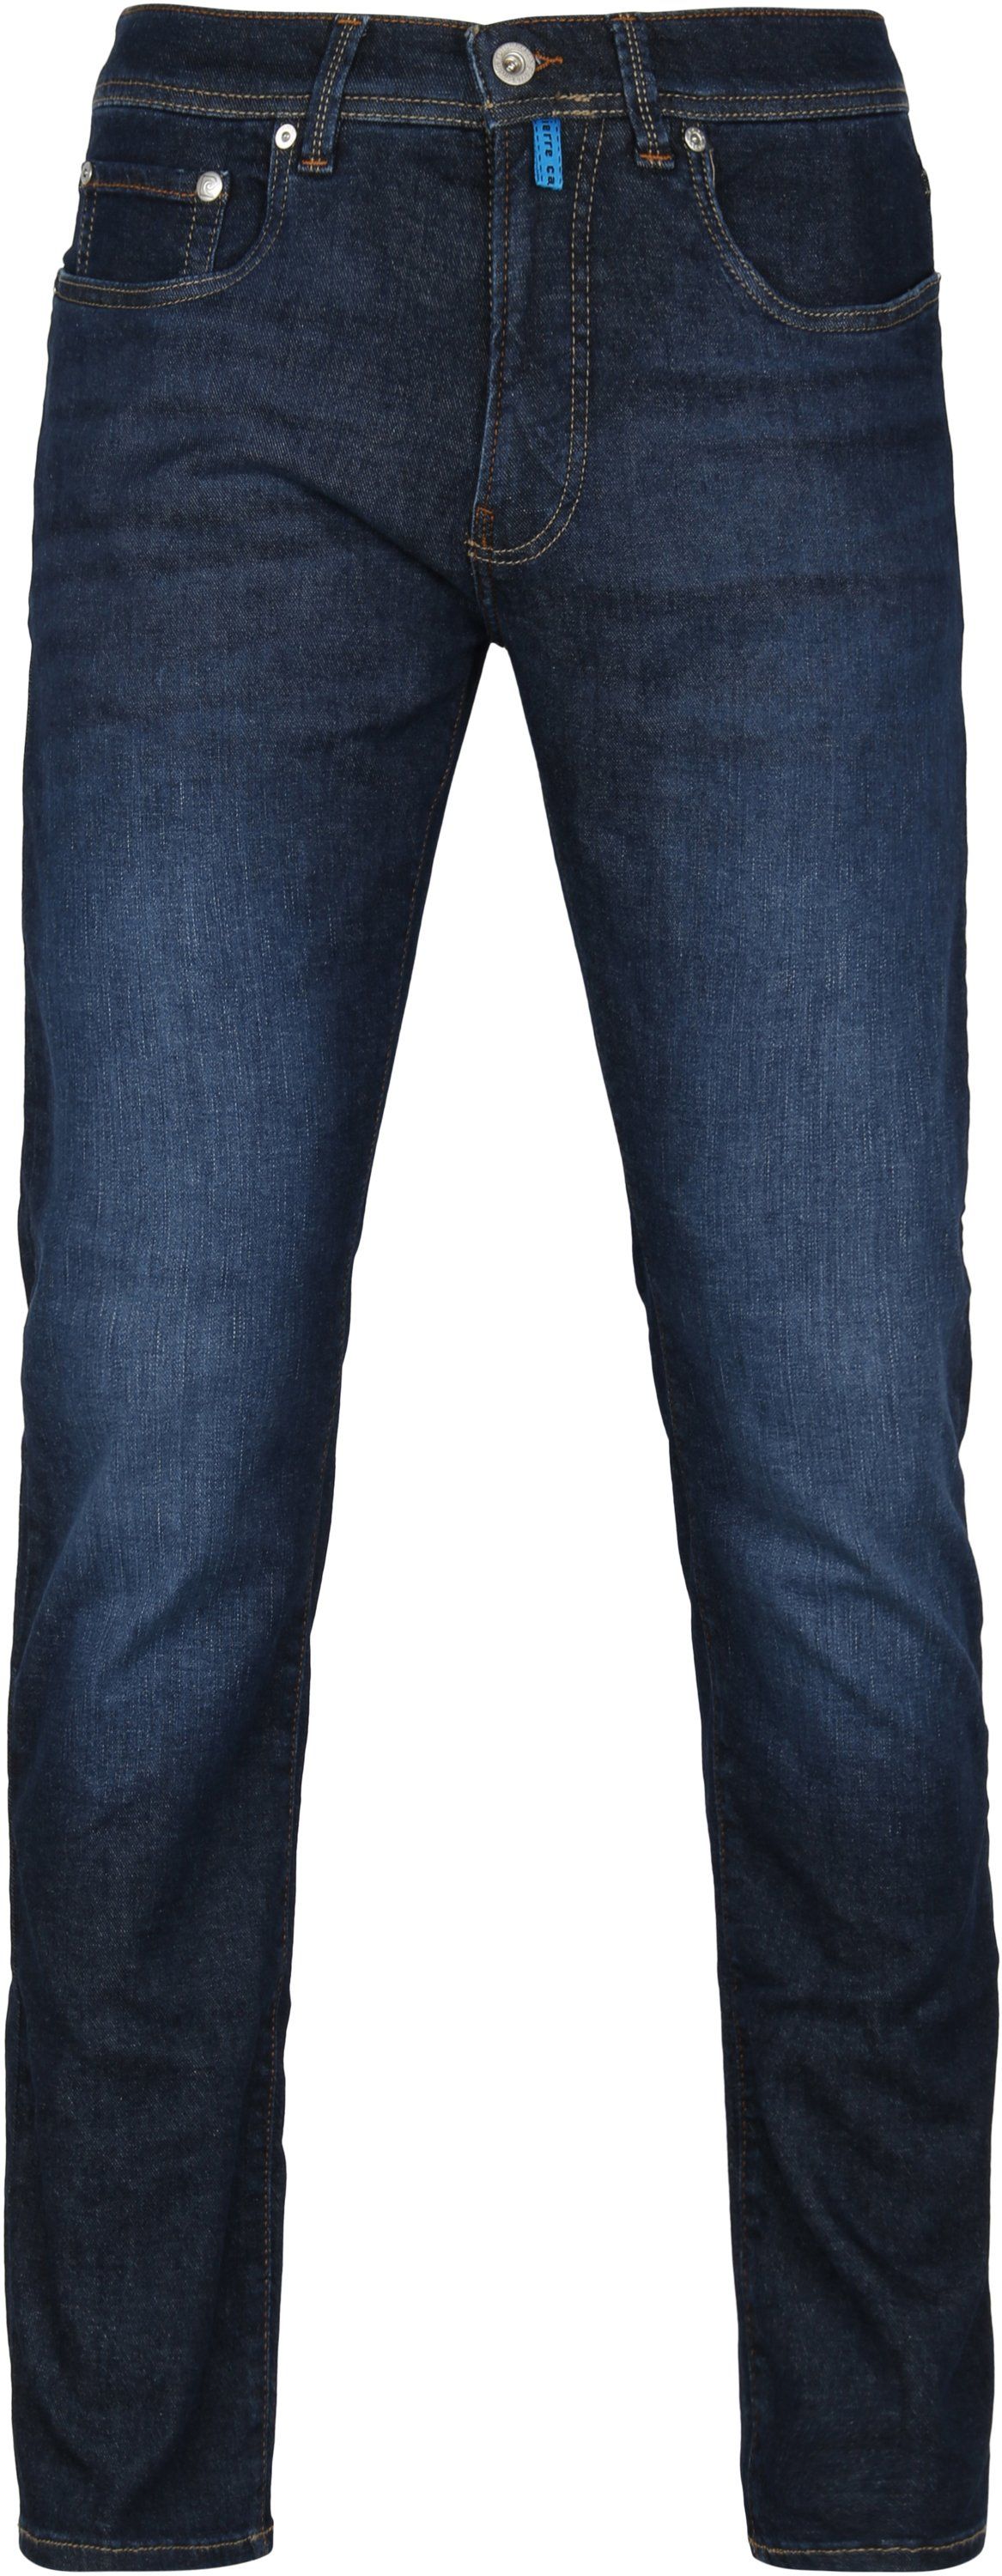 Pierre Cardin Jeans Lyon Tapered Future Flex Navy Dark Blue size W 31